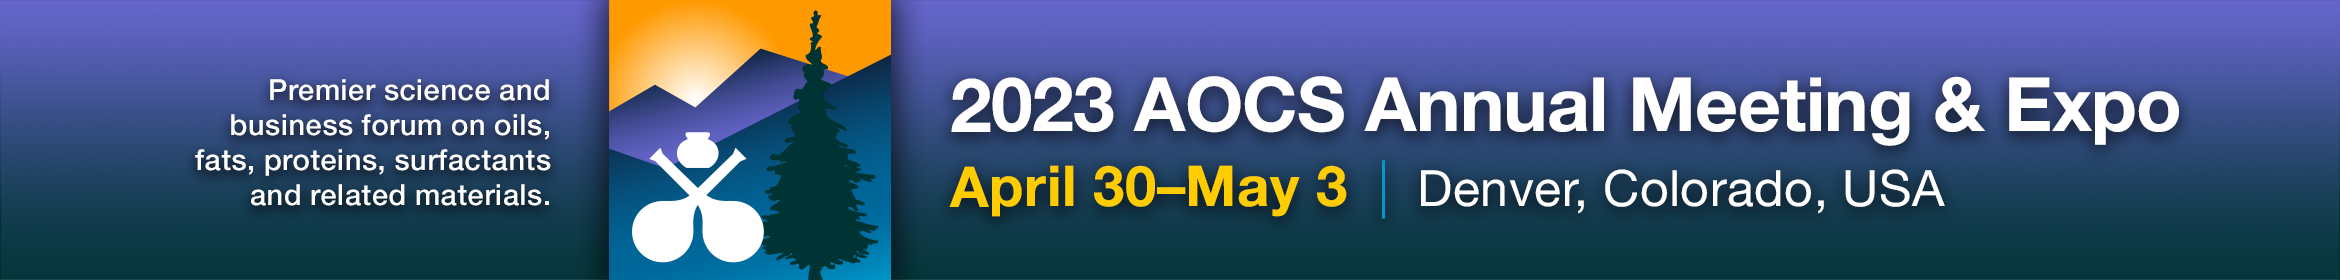 2023 AOCS Annual Meeting & Expo Main banner